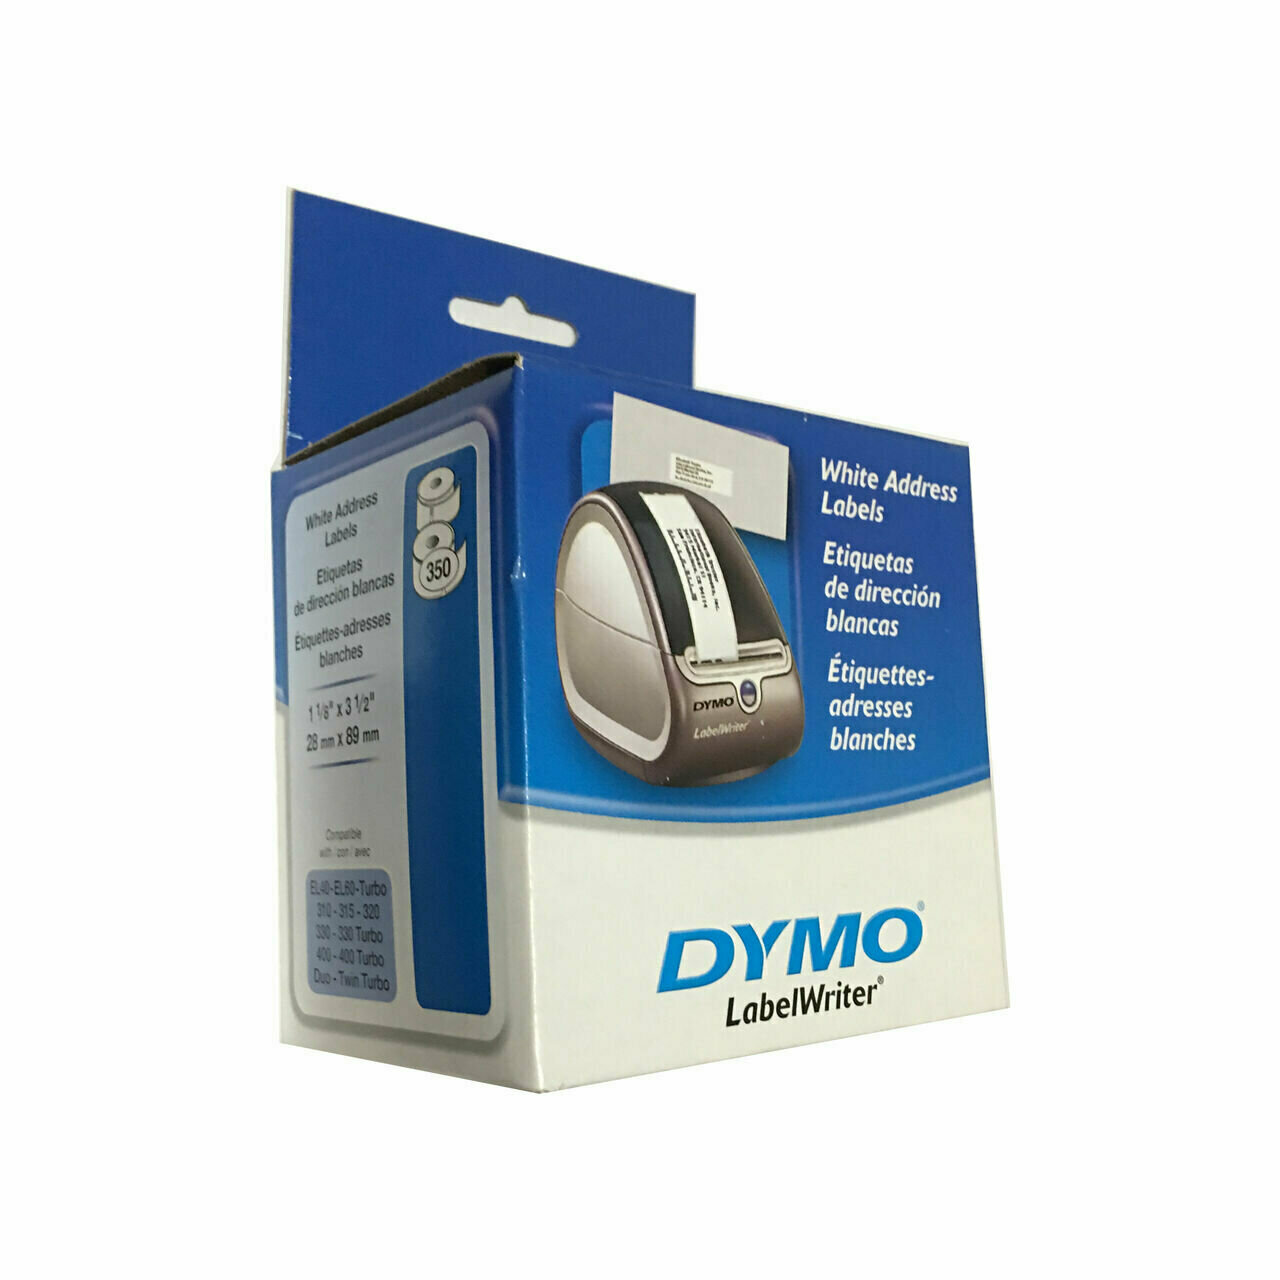 Dymo LabelWriter White Address Labels 1-1/8"x3-1/2" (30252)